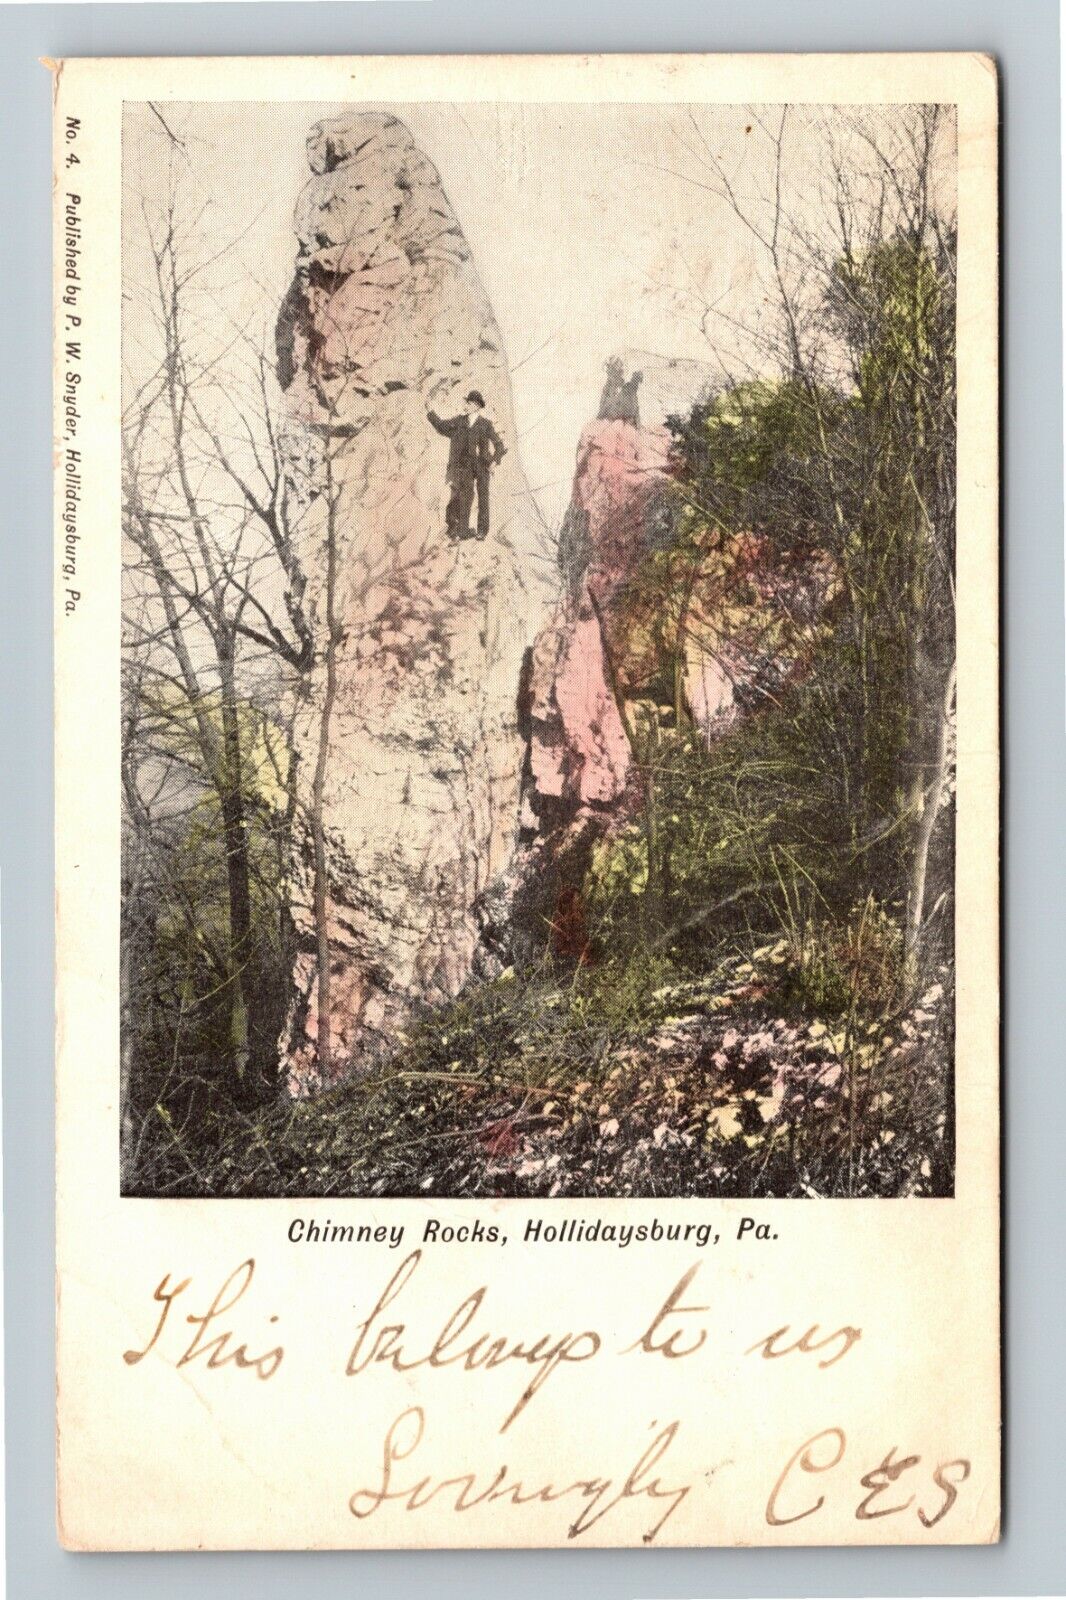 Hollidaysburg PA-Pennsylvania, Chimney Rocks, c1908 Vintage Souvenir Postcard